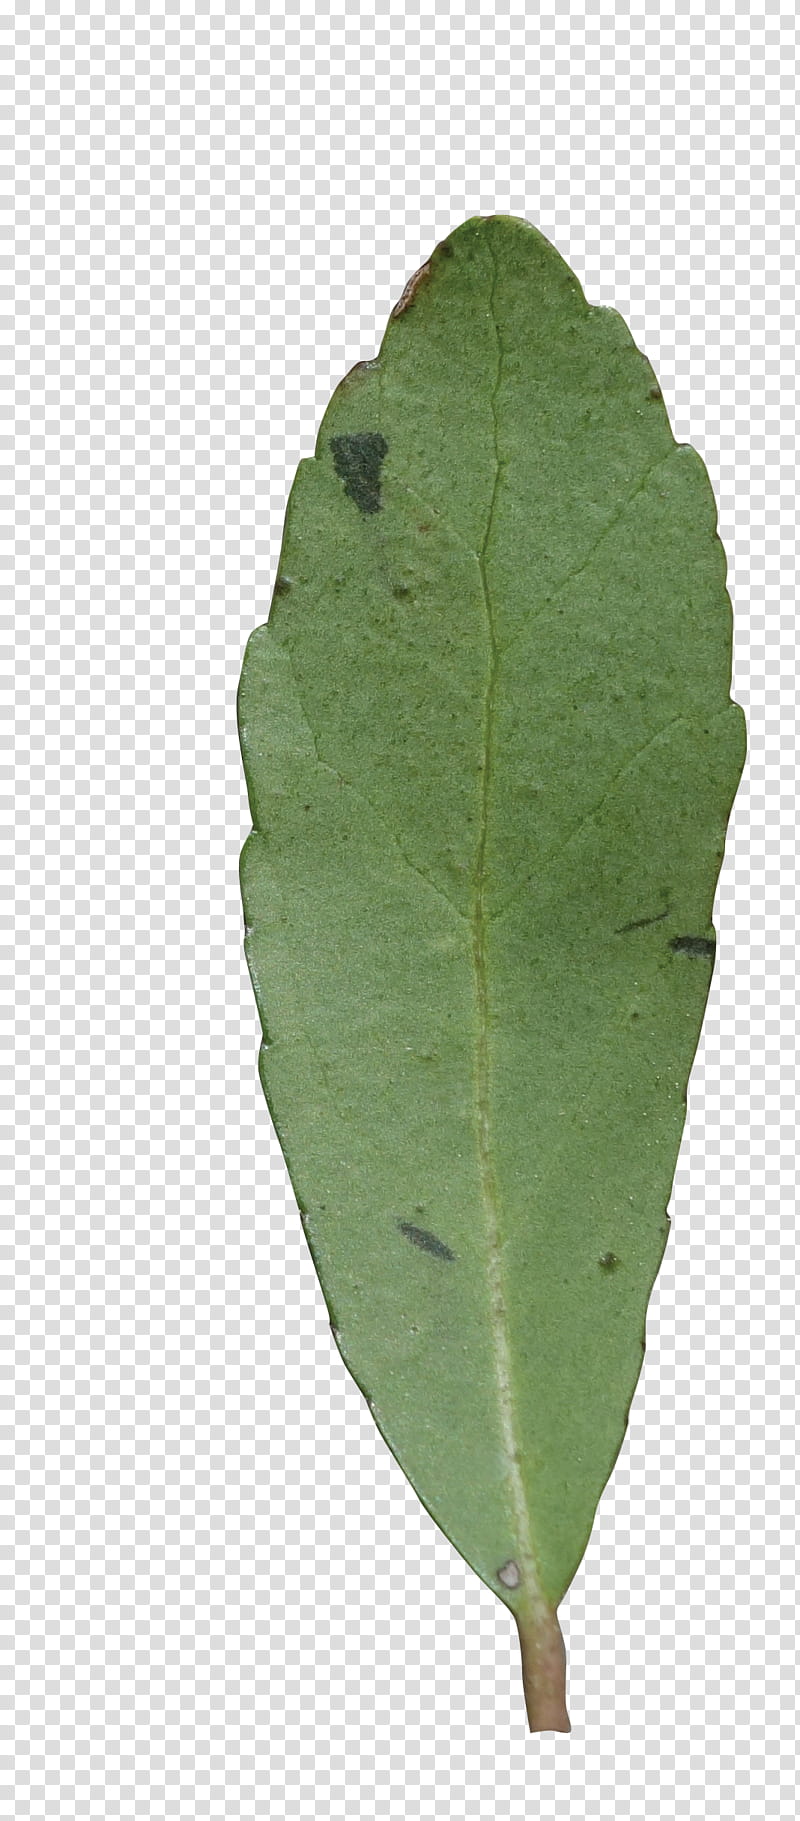 Green Leaf, Plant Pathology, Plants, Flower, Tree transparent background PNG clipart